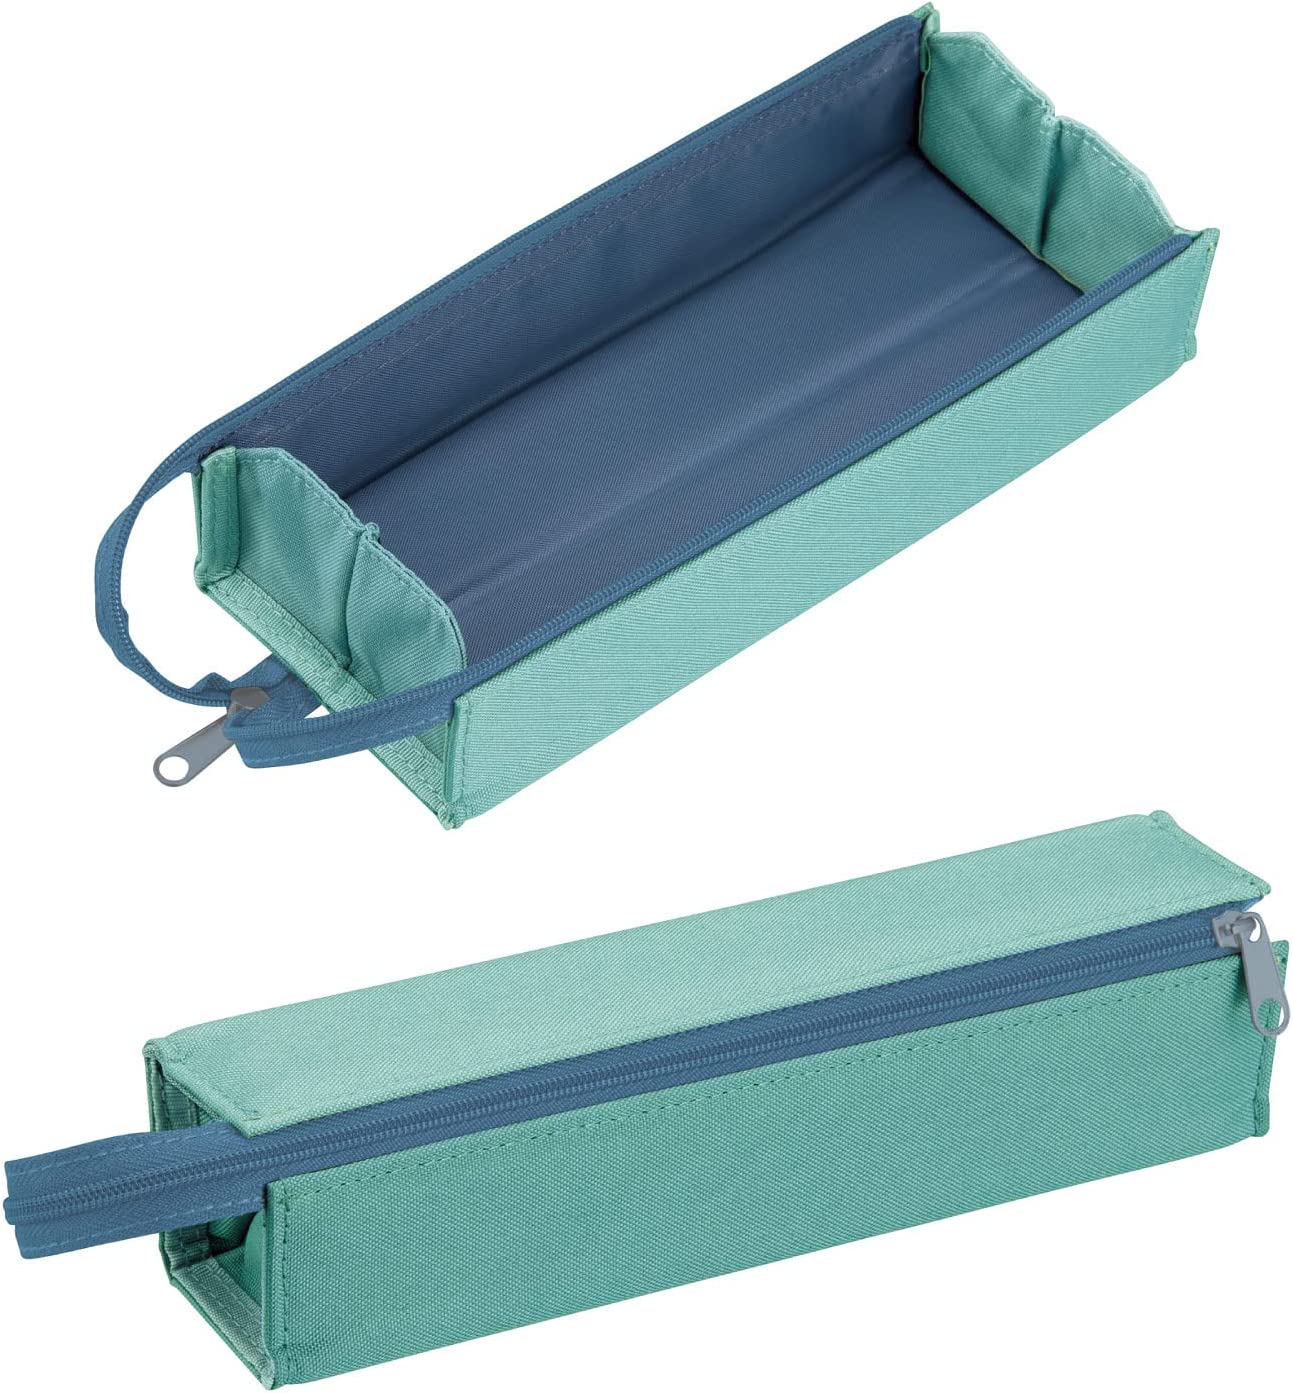 Kokuyo C2 Tray Type Pencil Cases - Slim  Diy pencil case, Pencil case  design, Diy pencil